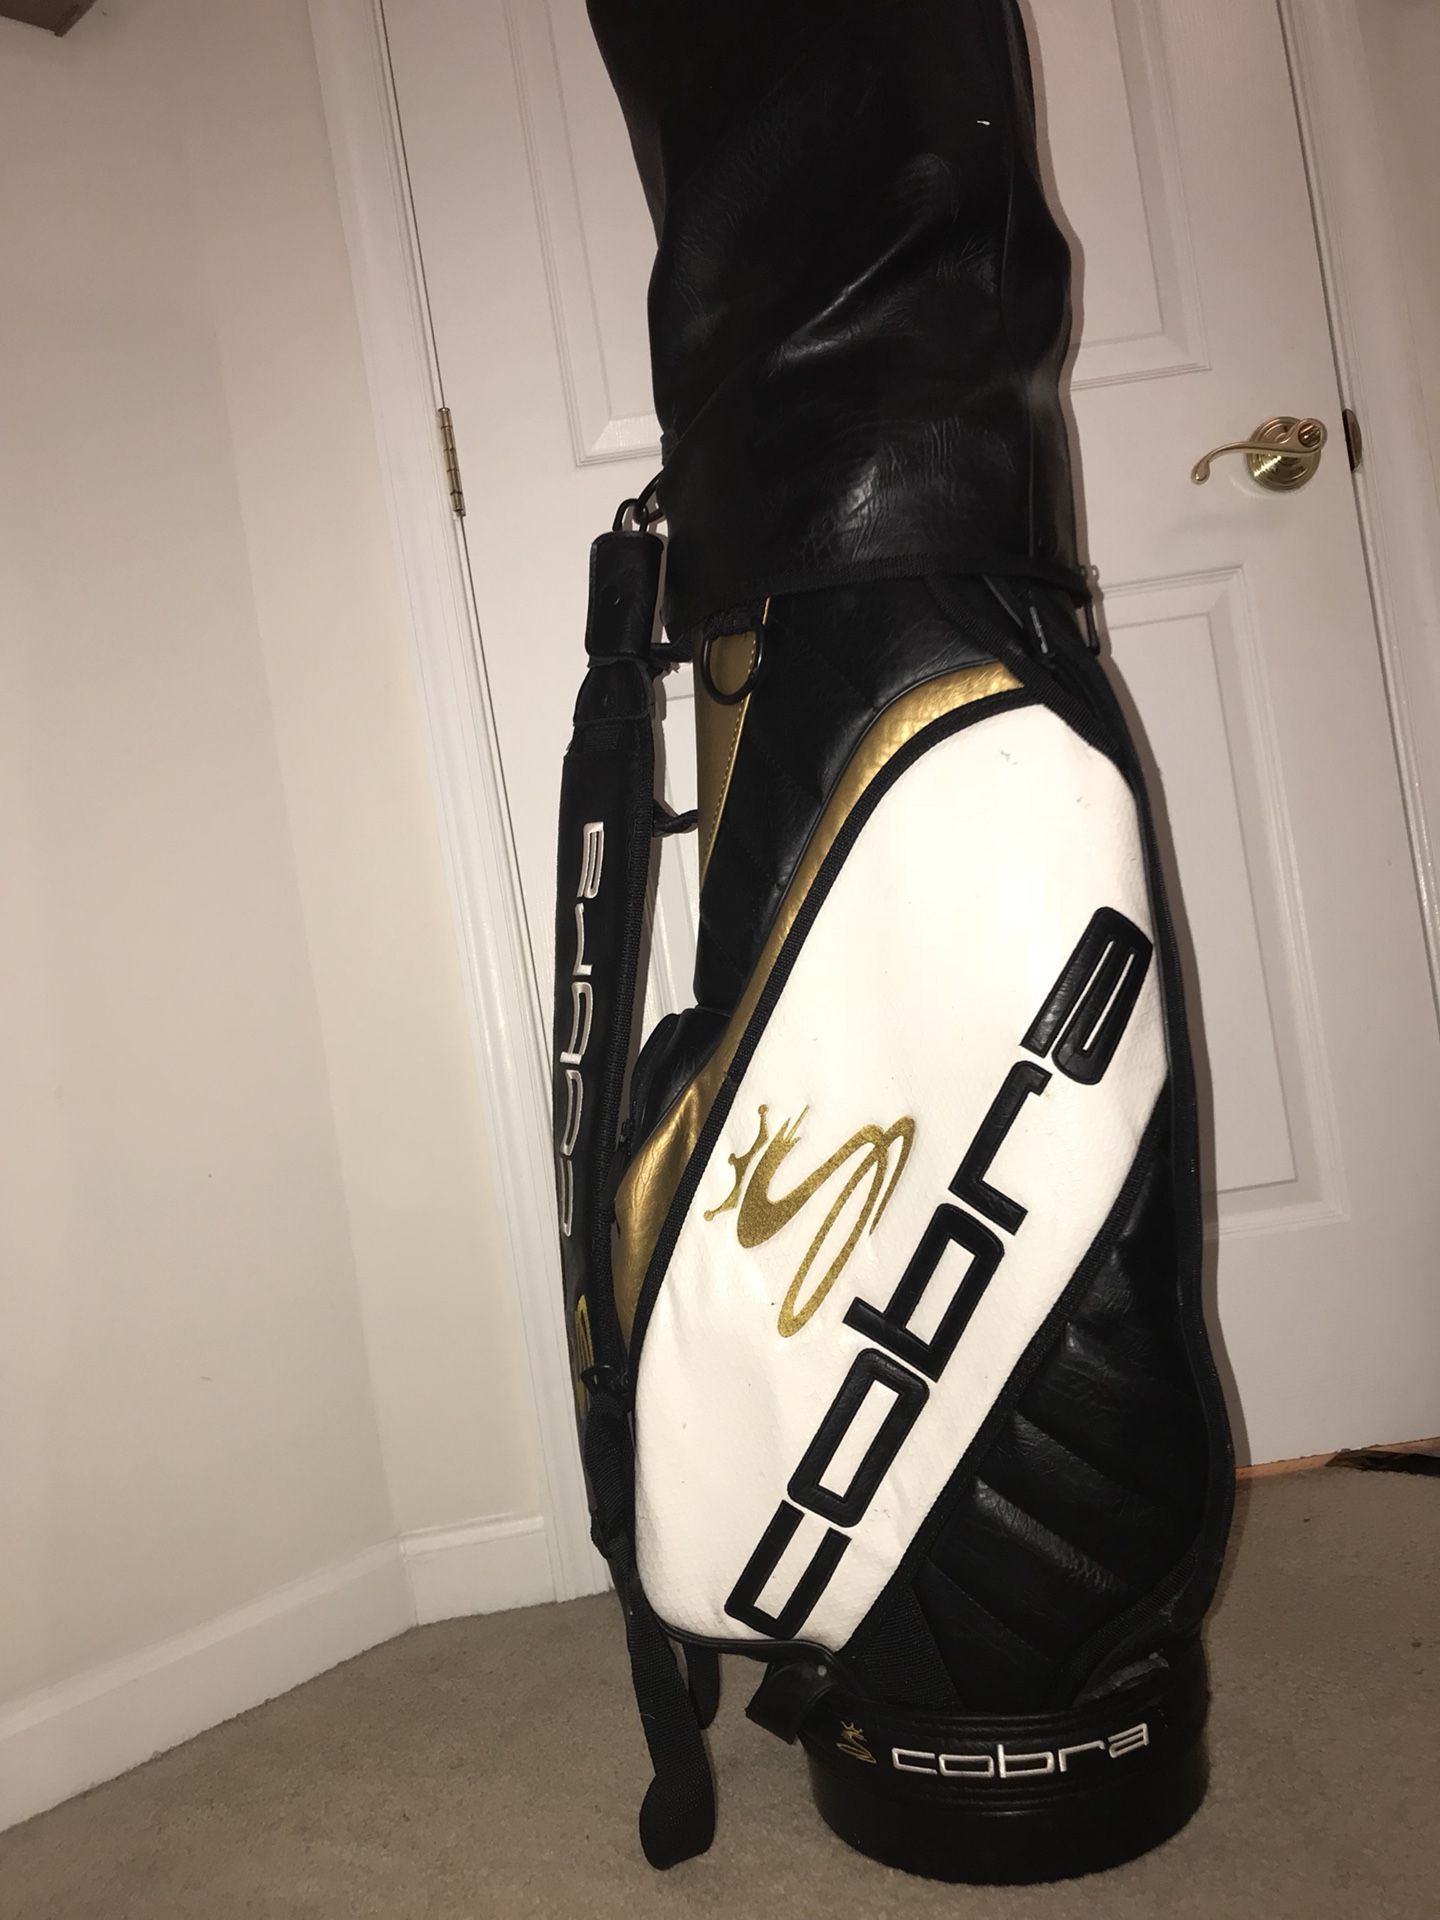 King cobra leather golf bag